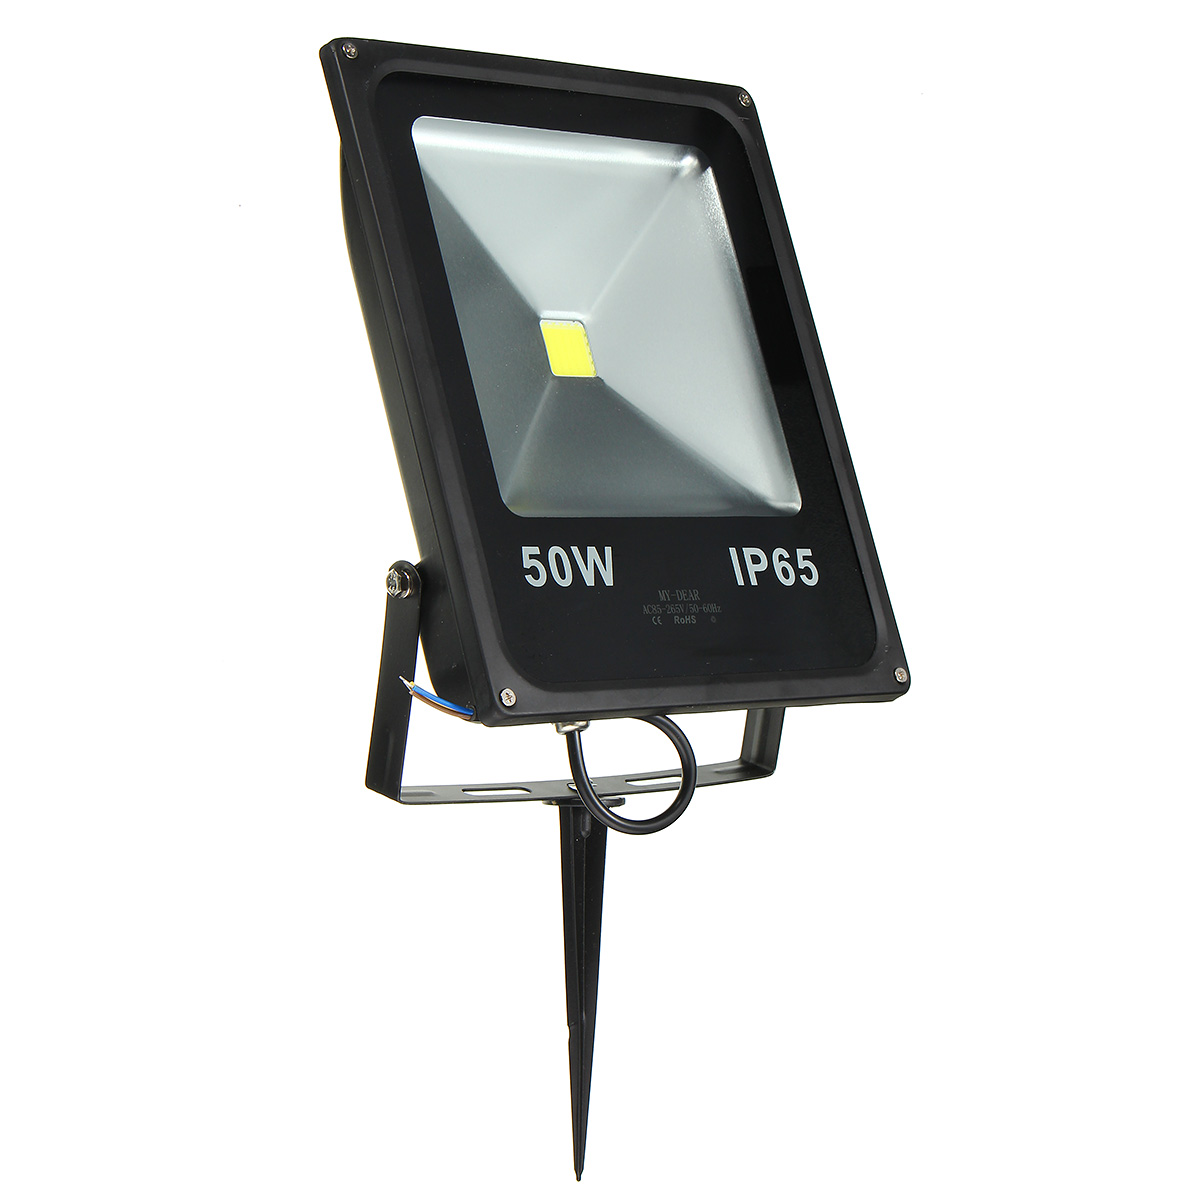 50W-Waterproof-IP65-WhiteWarm-White-LED-Flood-Light-Outdoor-Garden-Security-Lamp-1110423-5